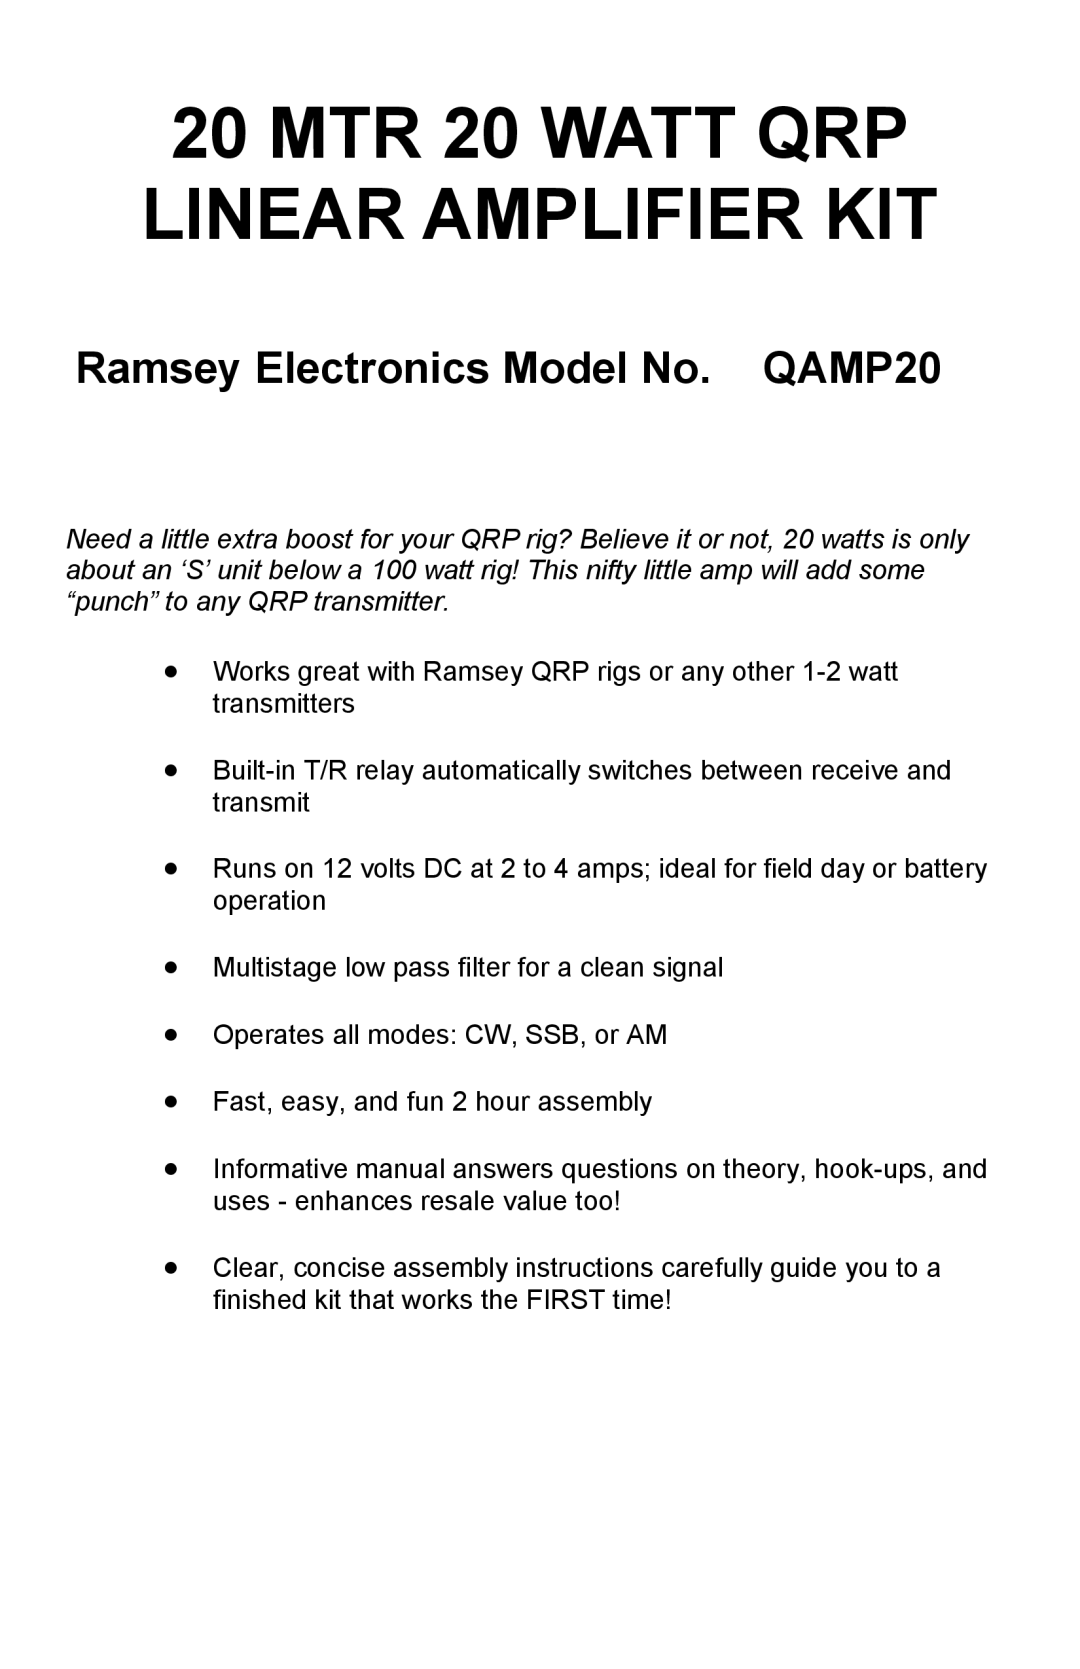 Ramsey Electronics manual MTR 20 WATT QRP LINEAR AMPLIFIER KIT, Ramsey Electronics Model No. QAMP20 